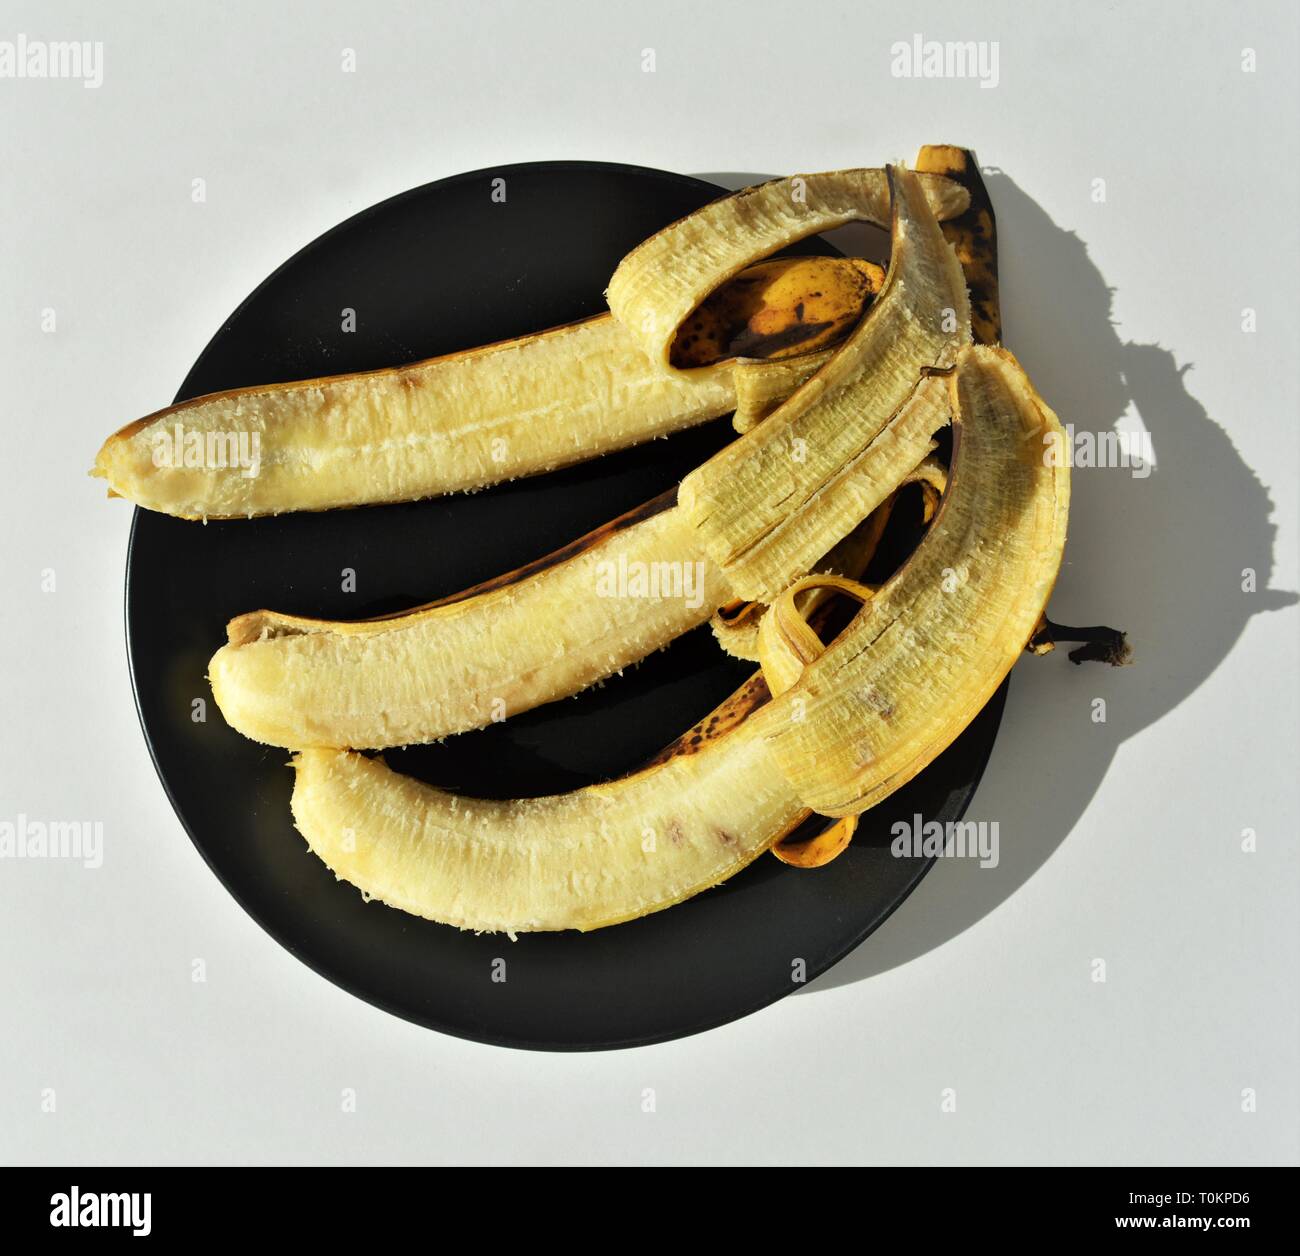 3 over ripe bananas on black plate Stock Photo